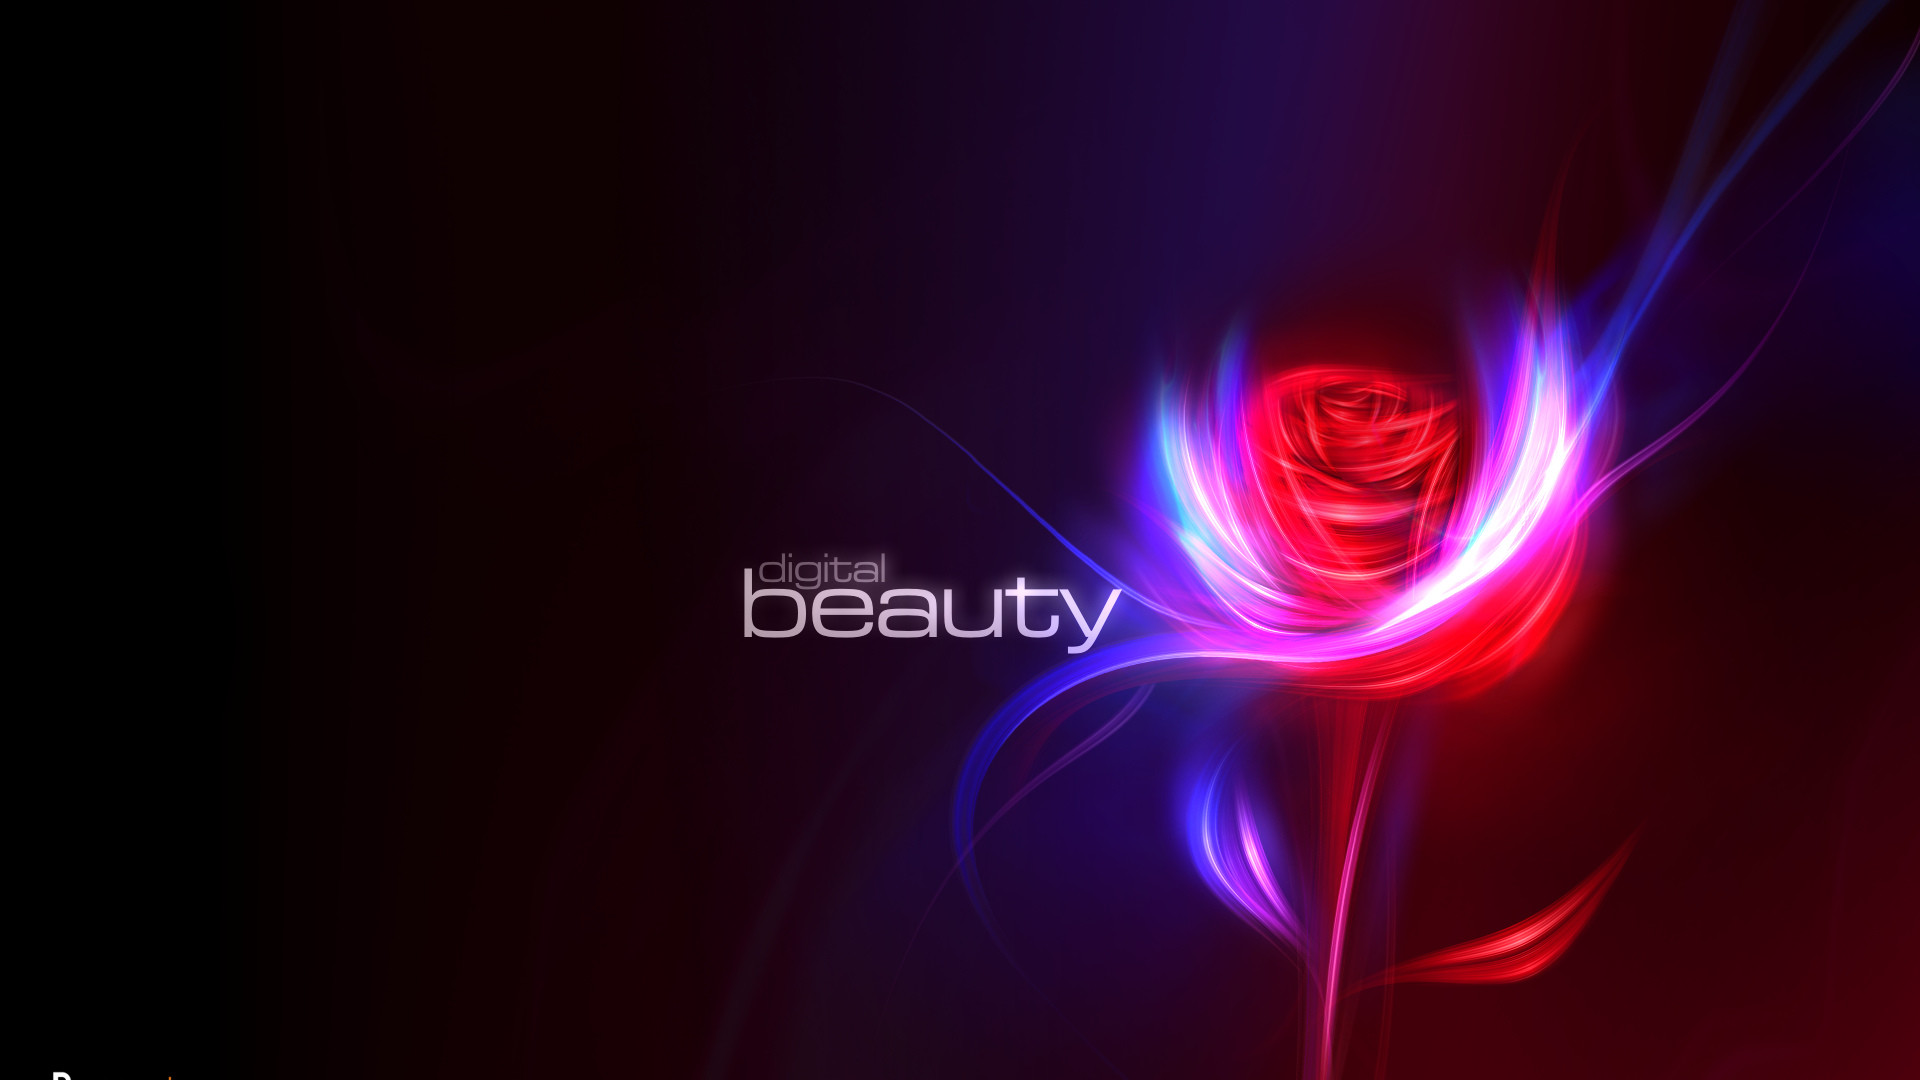 Digital Beauty desktop PC and Mac wallpaper